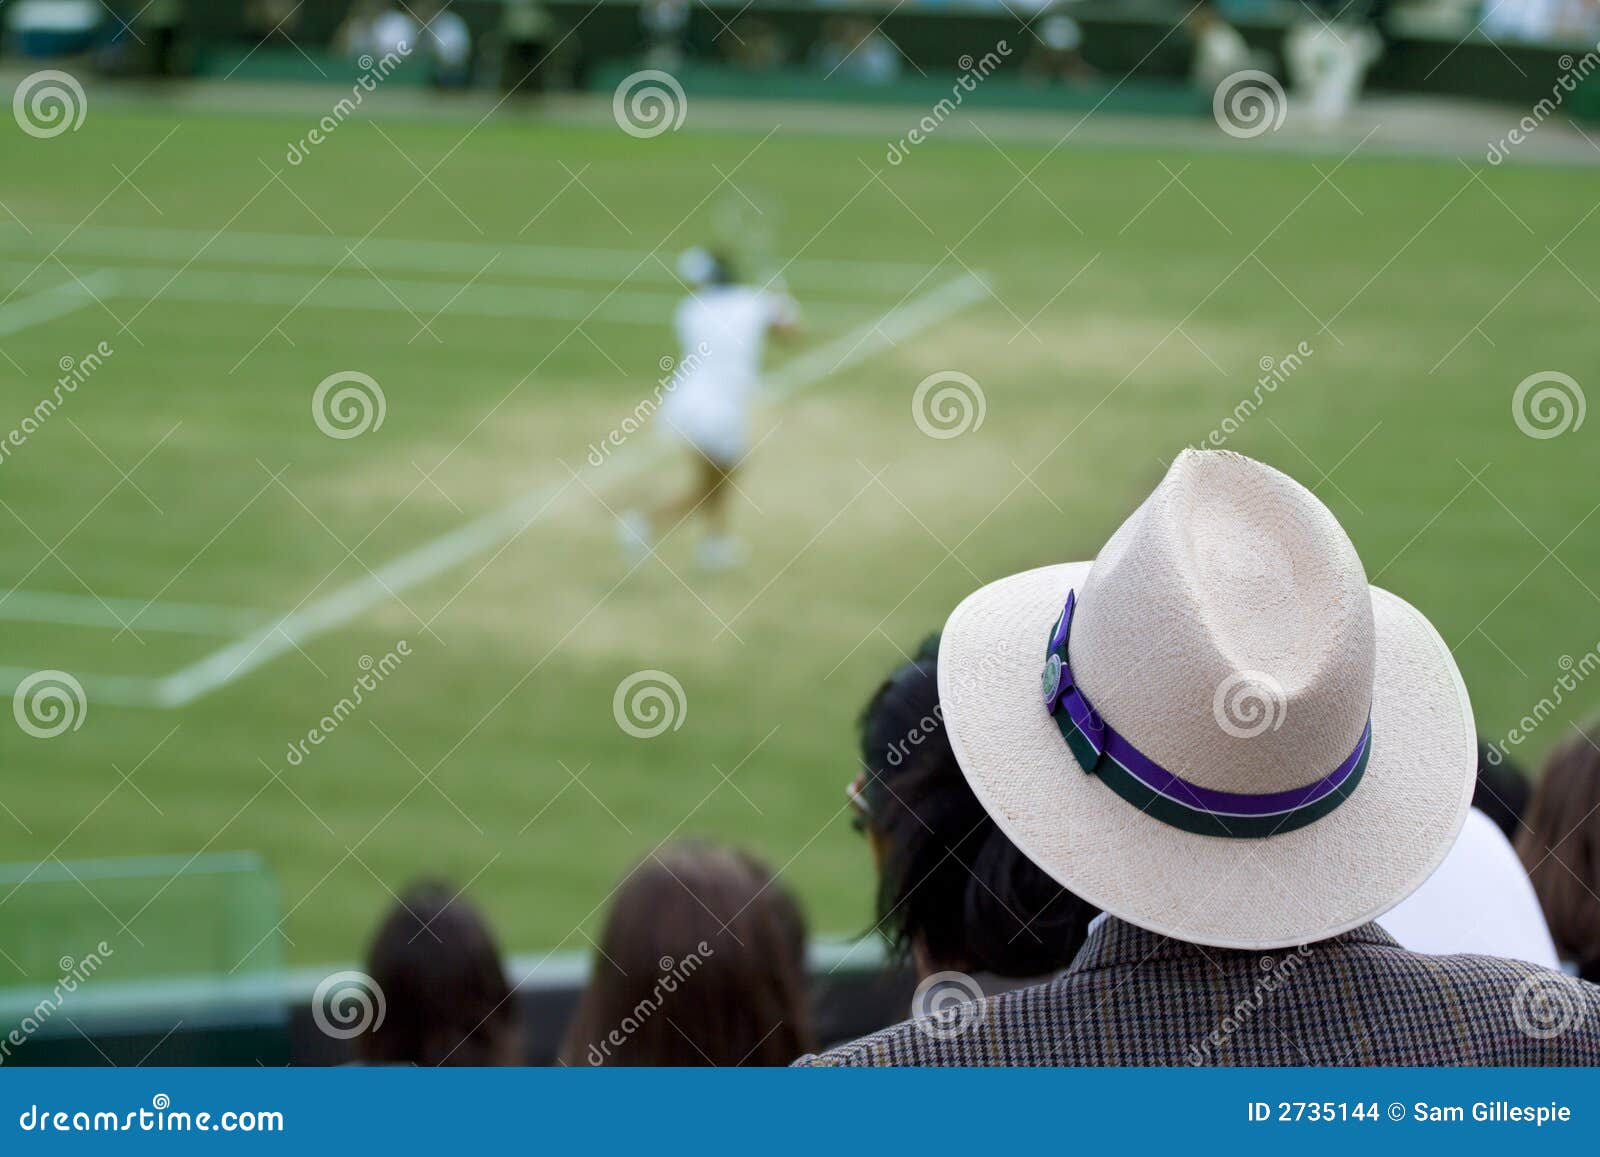 man watching tennis match